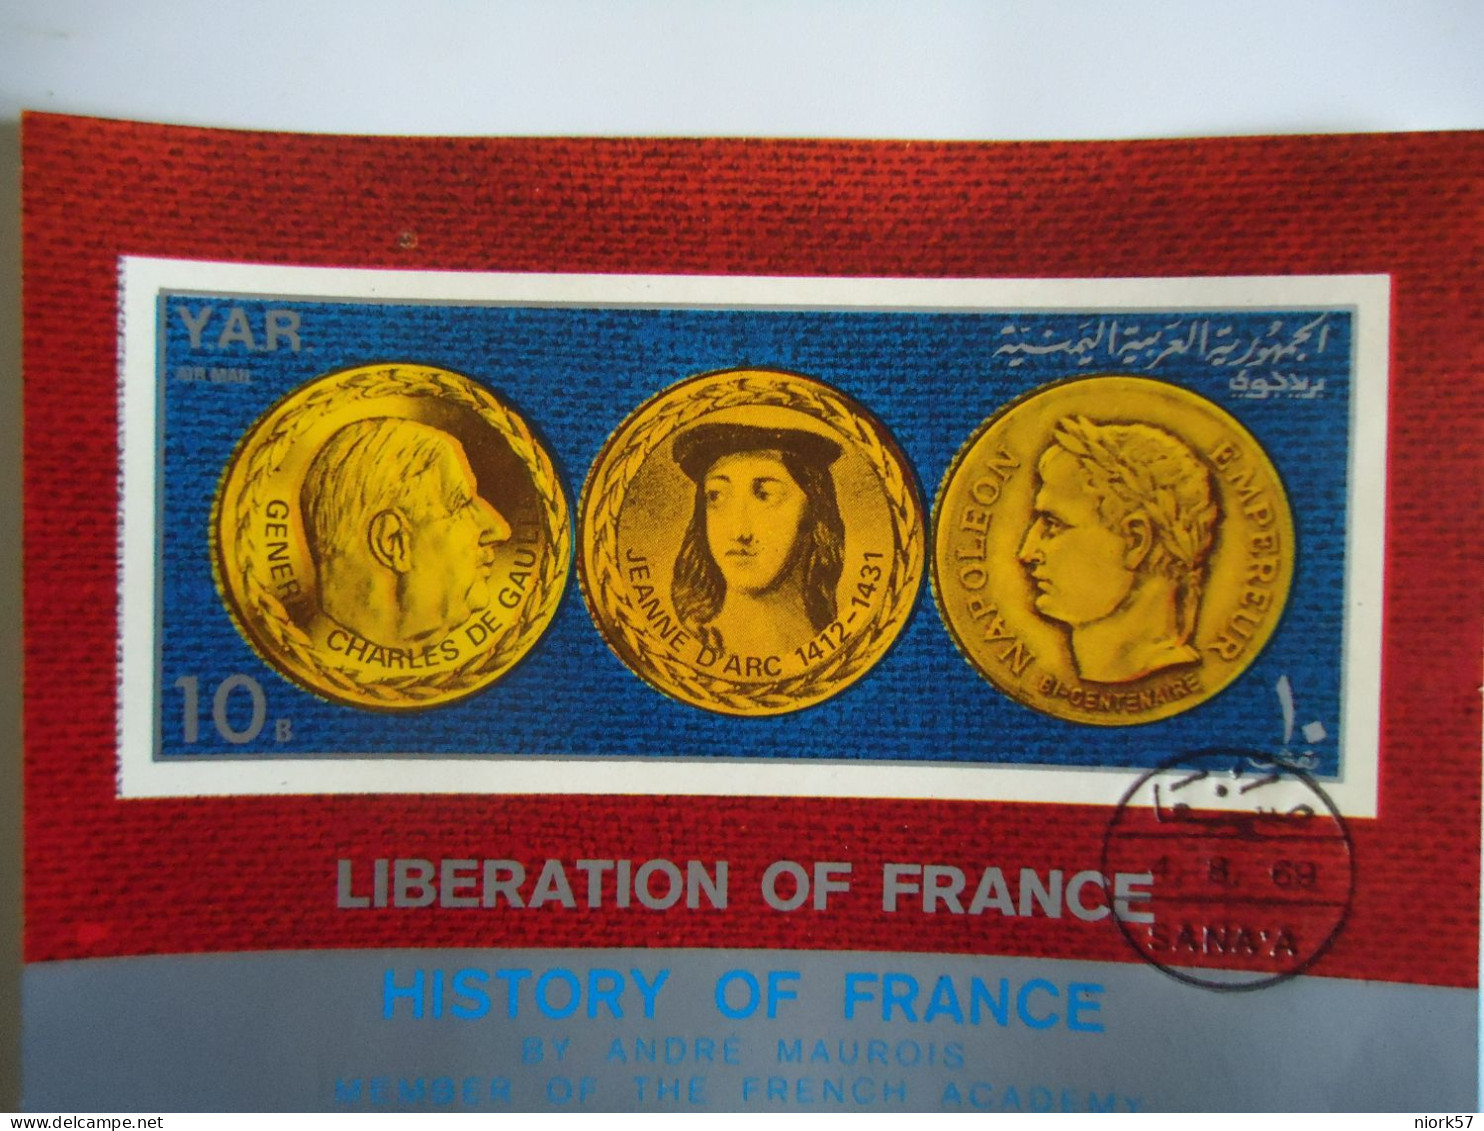 YEMEN  YAR  USED  SHEET HISTORY OF FRANCE COINS - Revolución Francesa